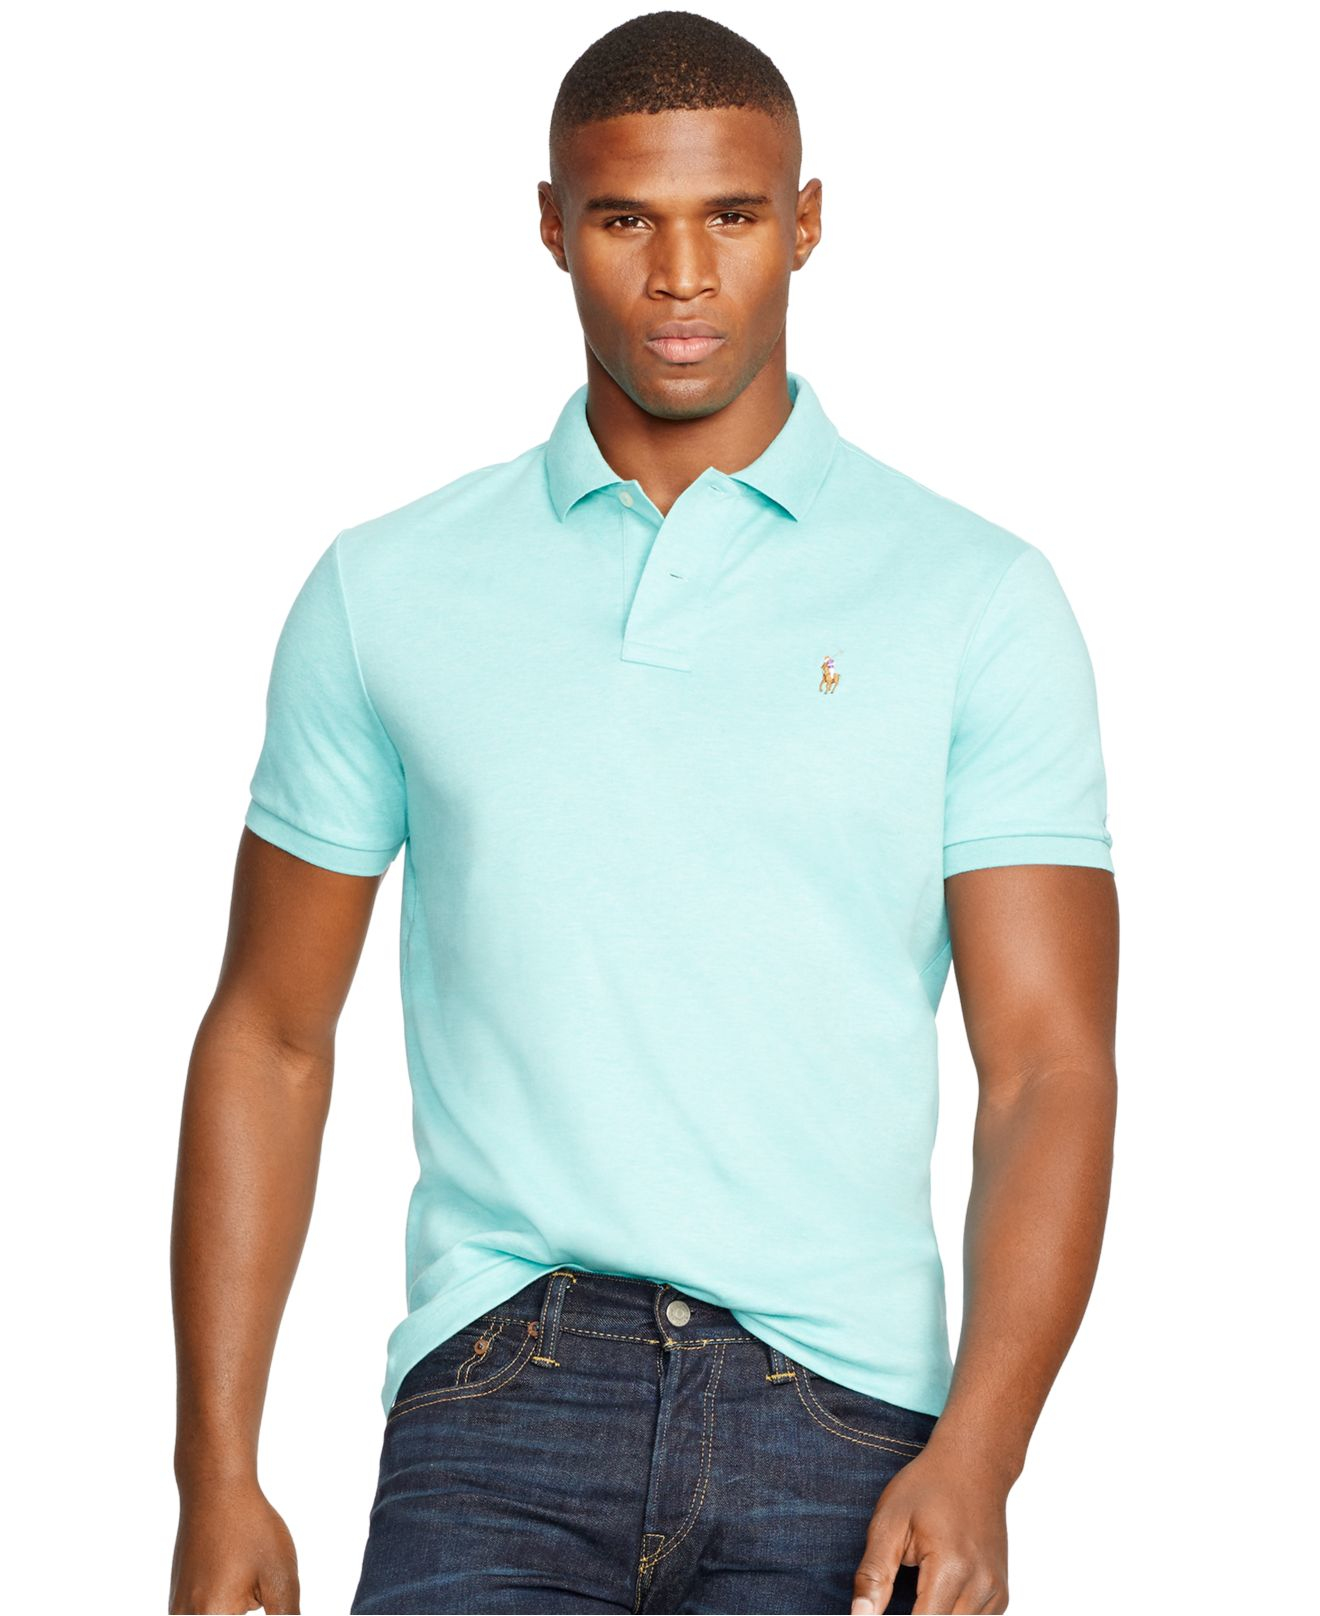 Lyst - Polo Ralph Lauren Pima Cotton Polo Shirt in Blue for Men